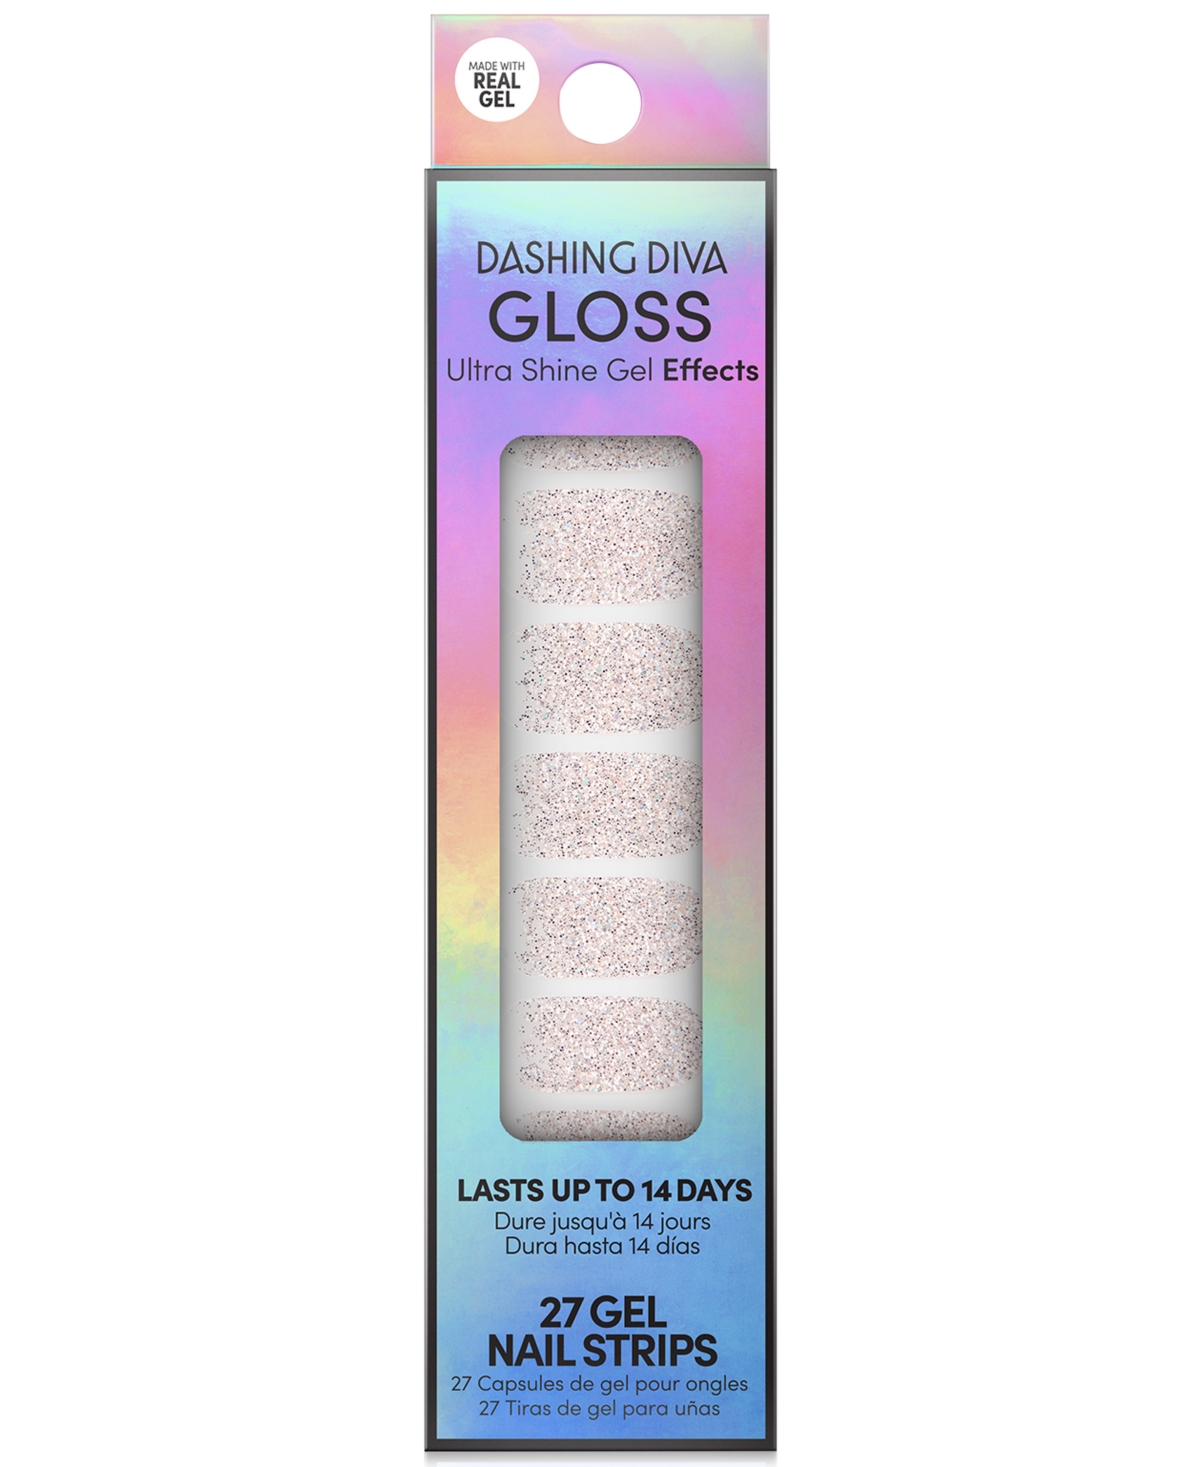 Dashing Diva Gloss Ultra Shine Gel Effects In Rosã© All Day